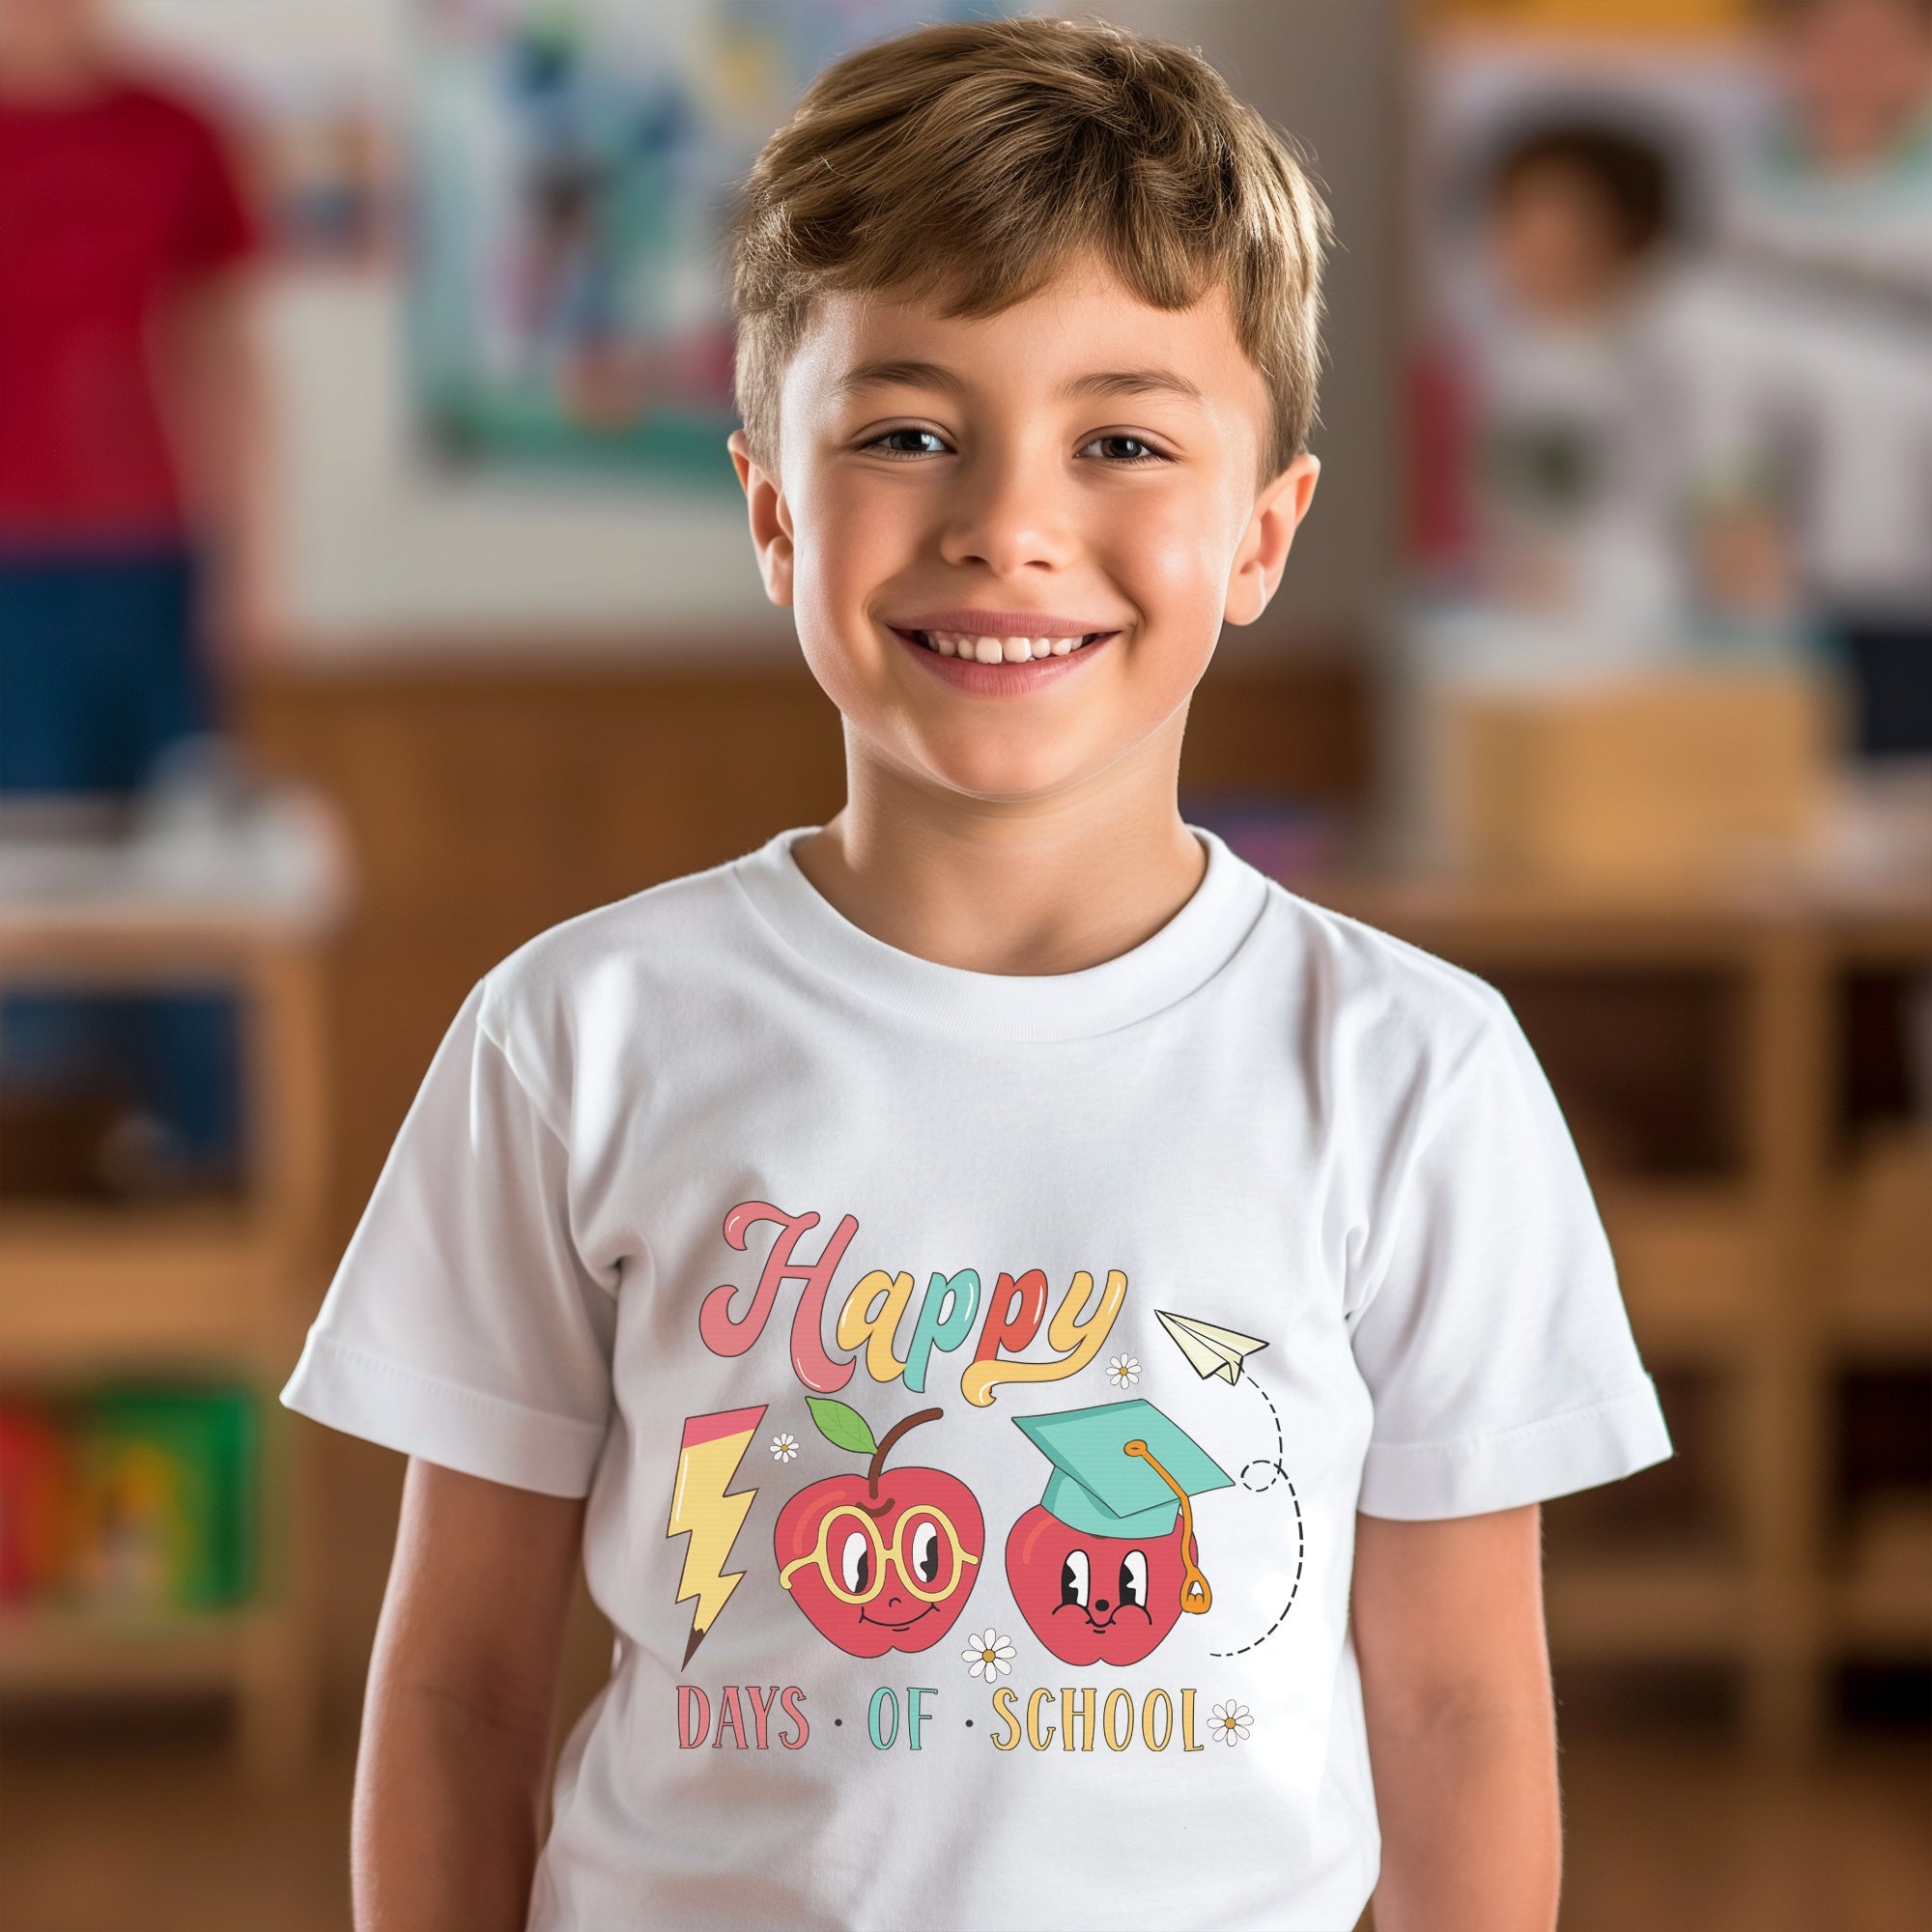 100 Days of School Kids T-Shirt 1189